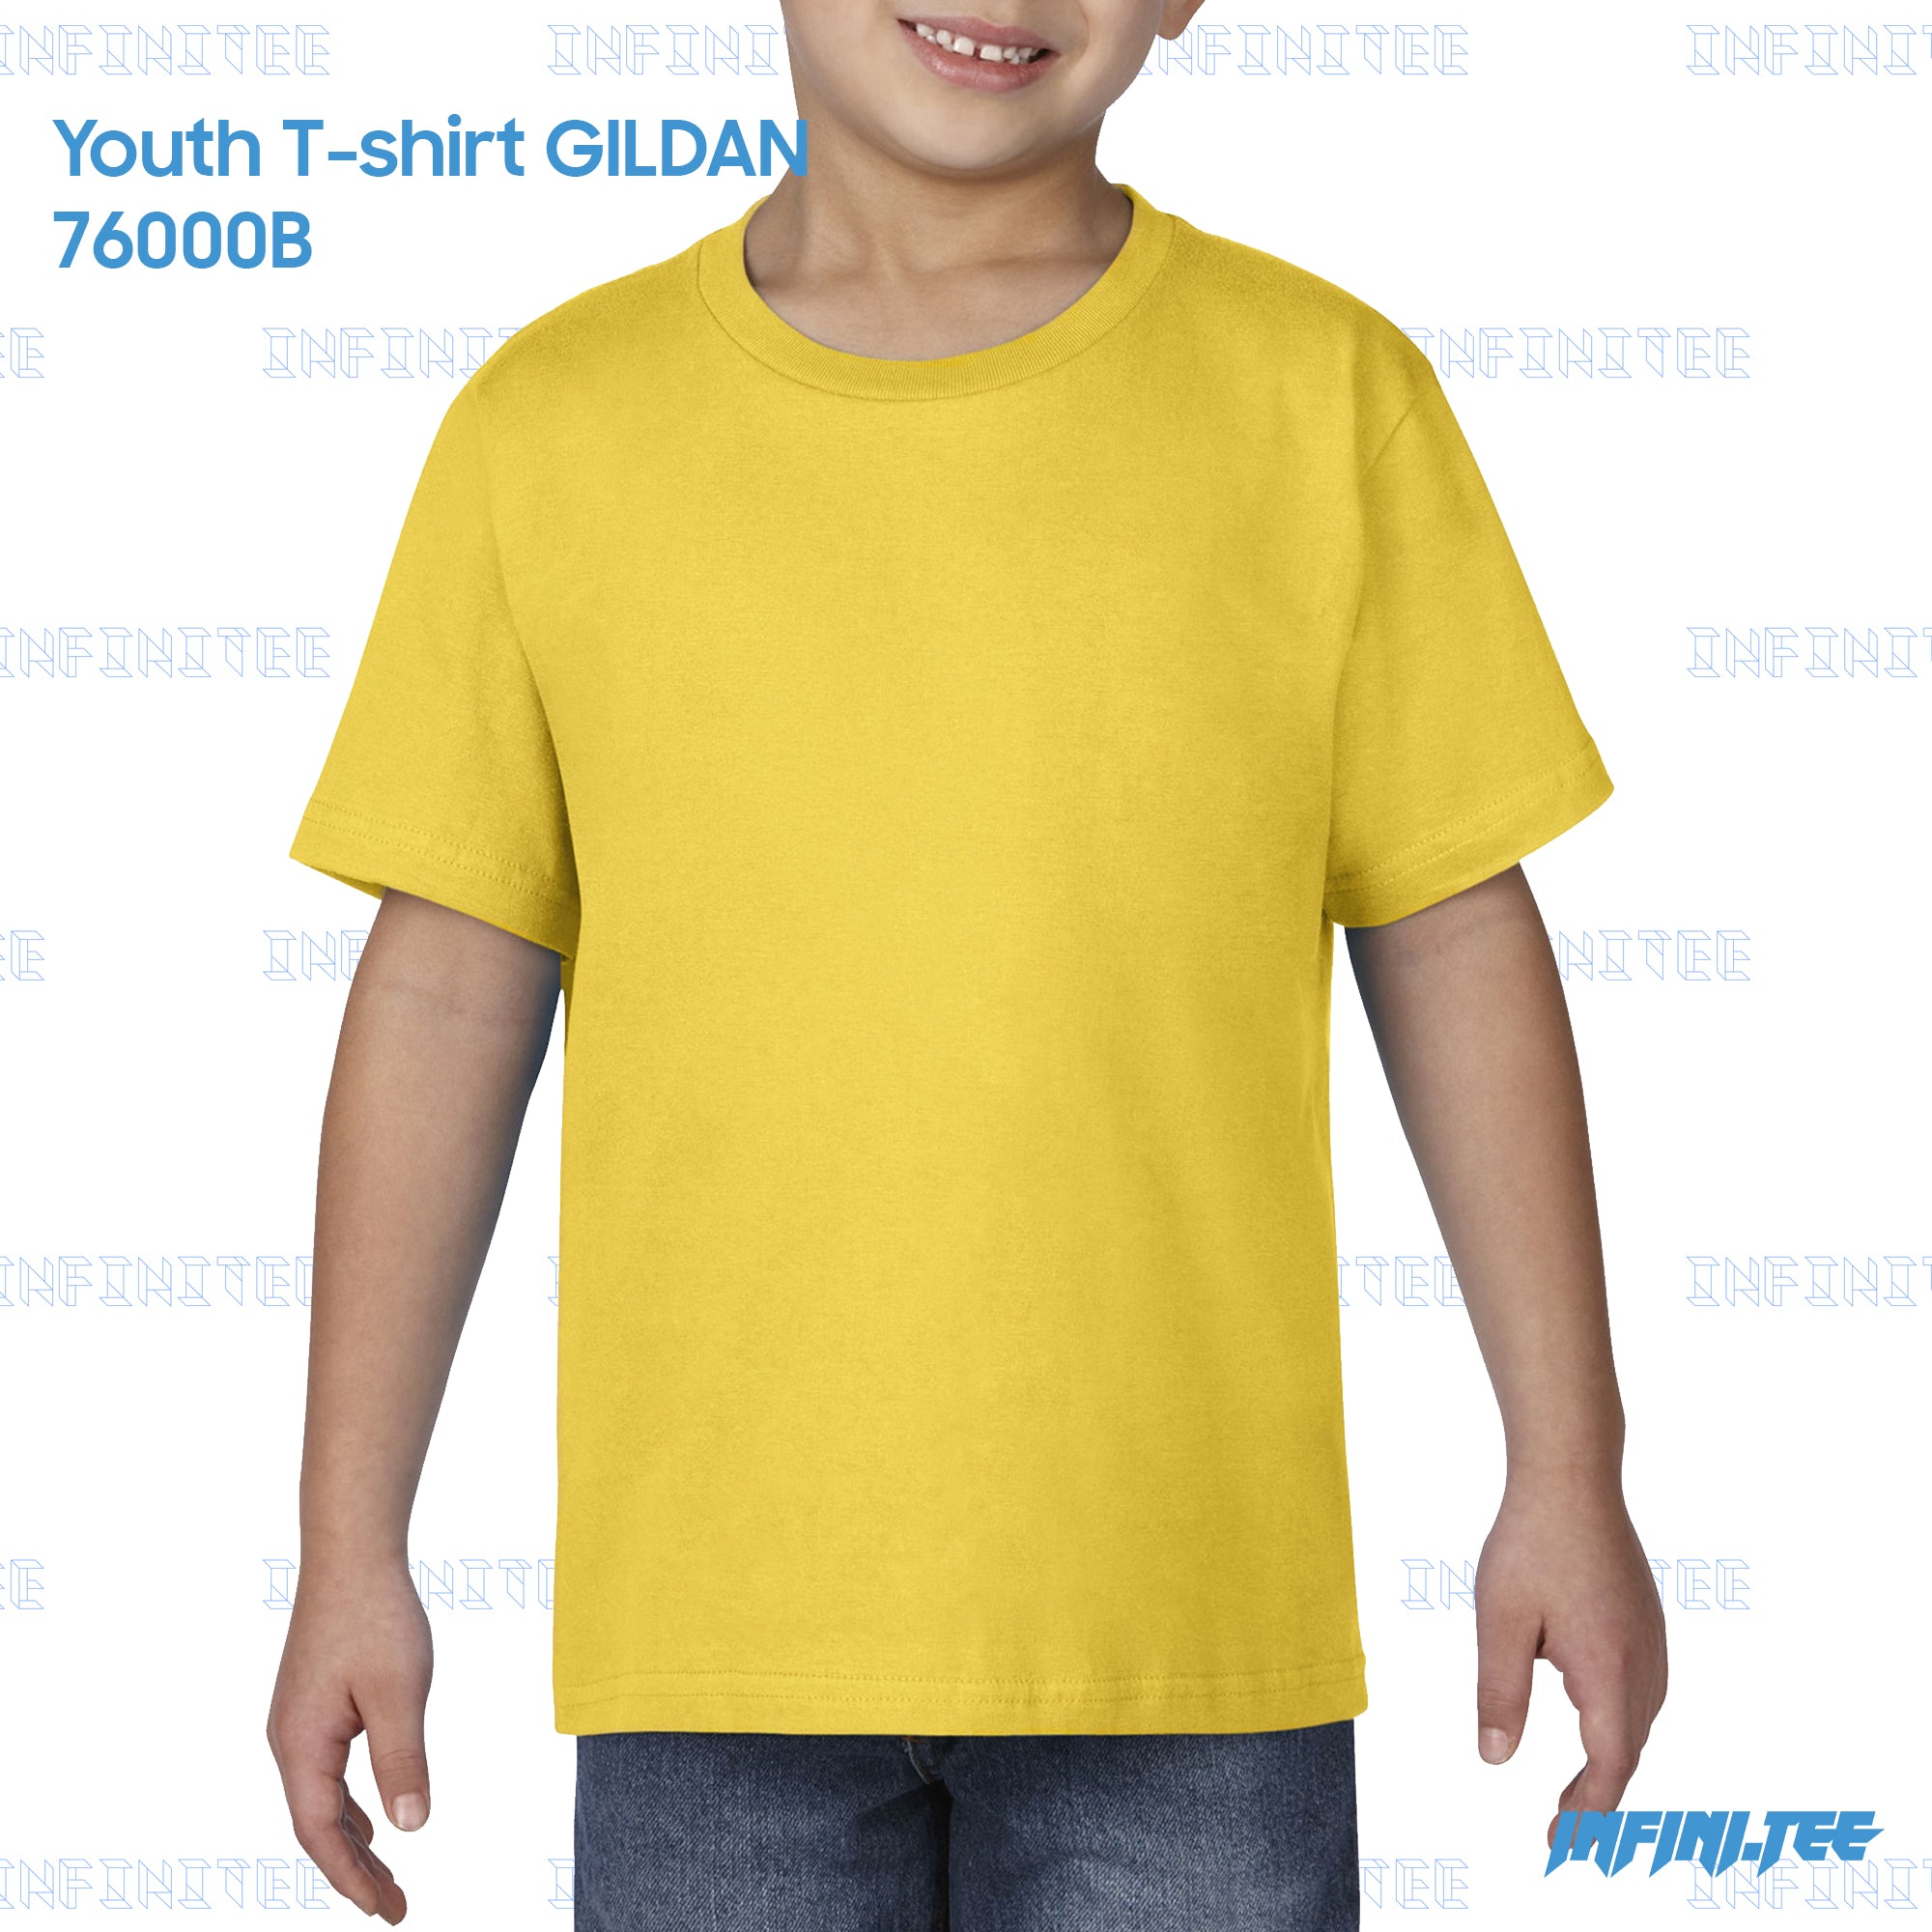 Youth T-shirt 76000B GILDAN - DAISY